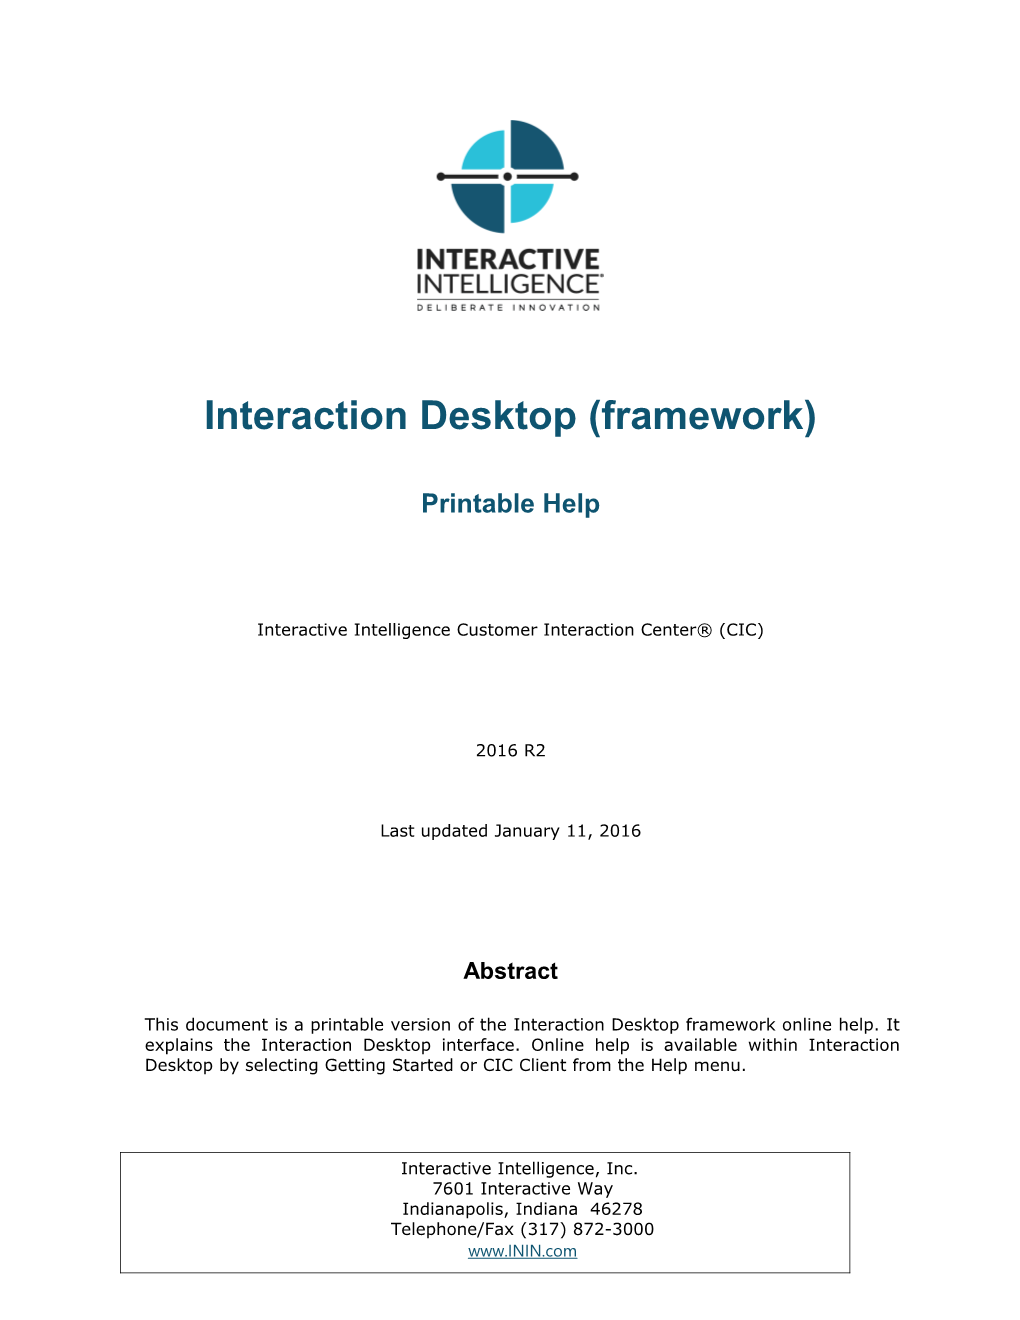 Interaction Desktop (Framework)